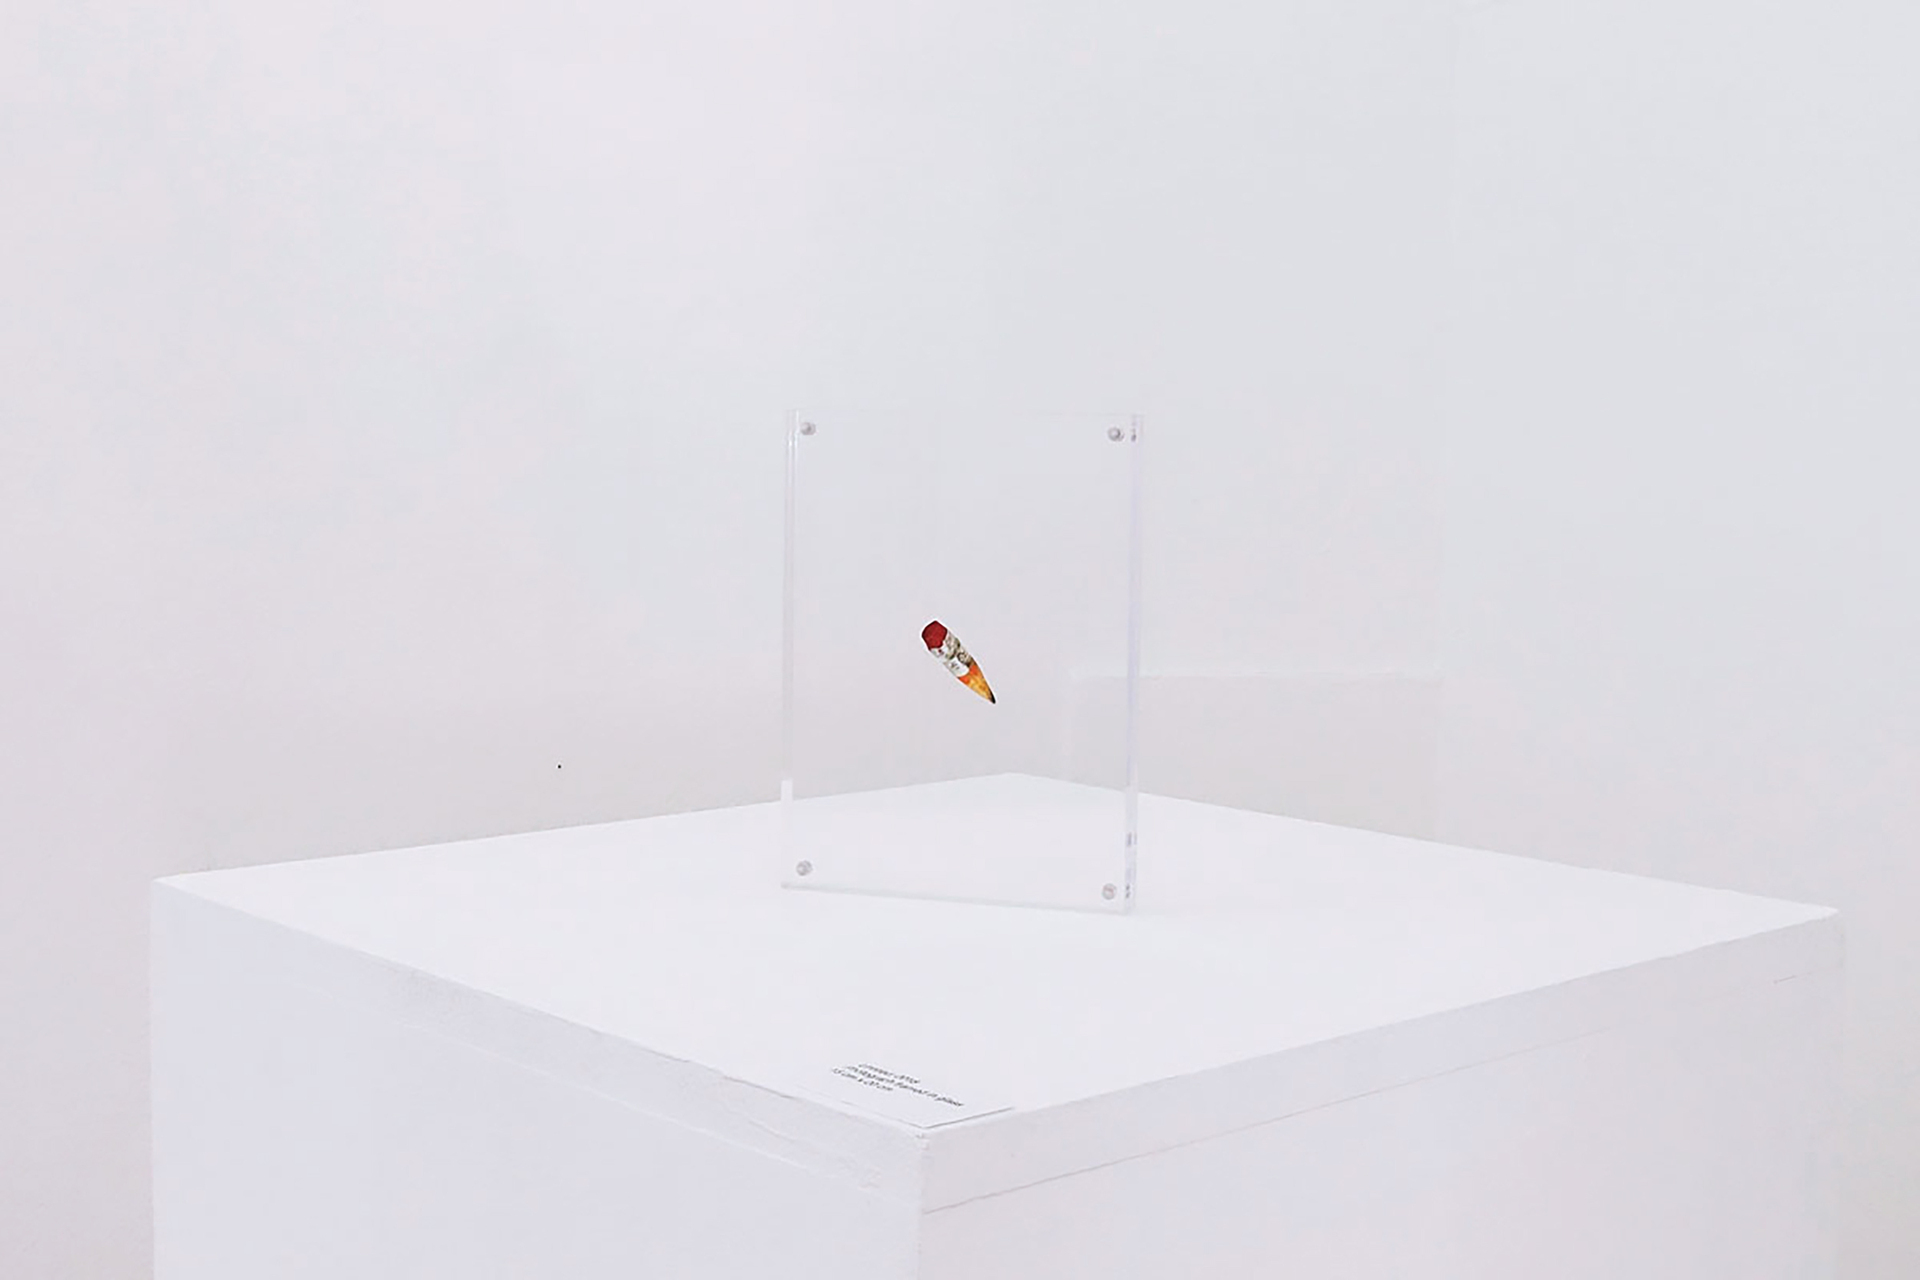 Marta Galmozzi, Untitled (2018), Photograph, plexiglass frame, 15 x 20 cm, installation view. Courtesy of the artist and PVC